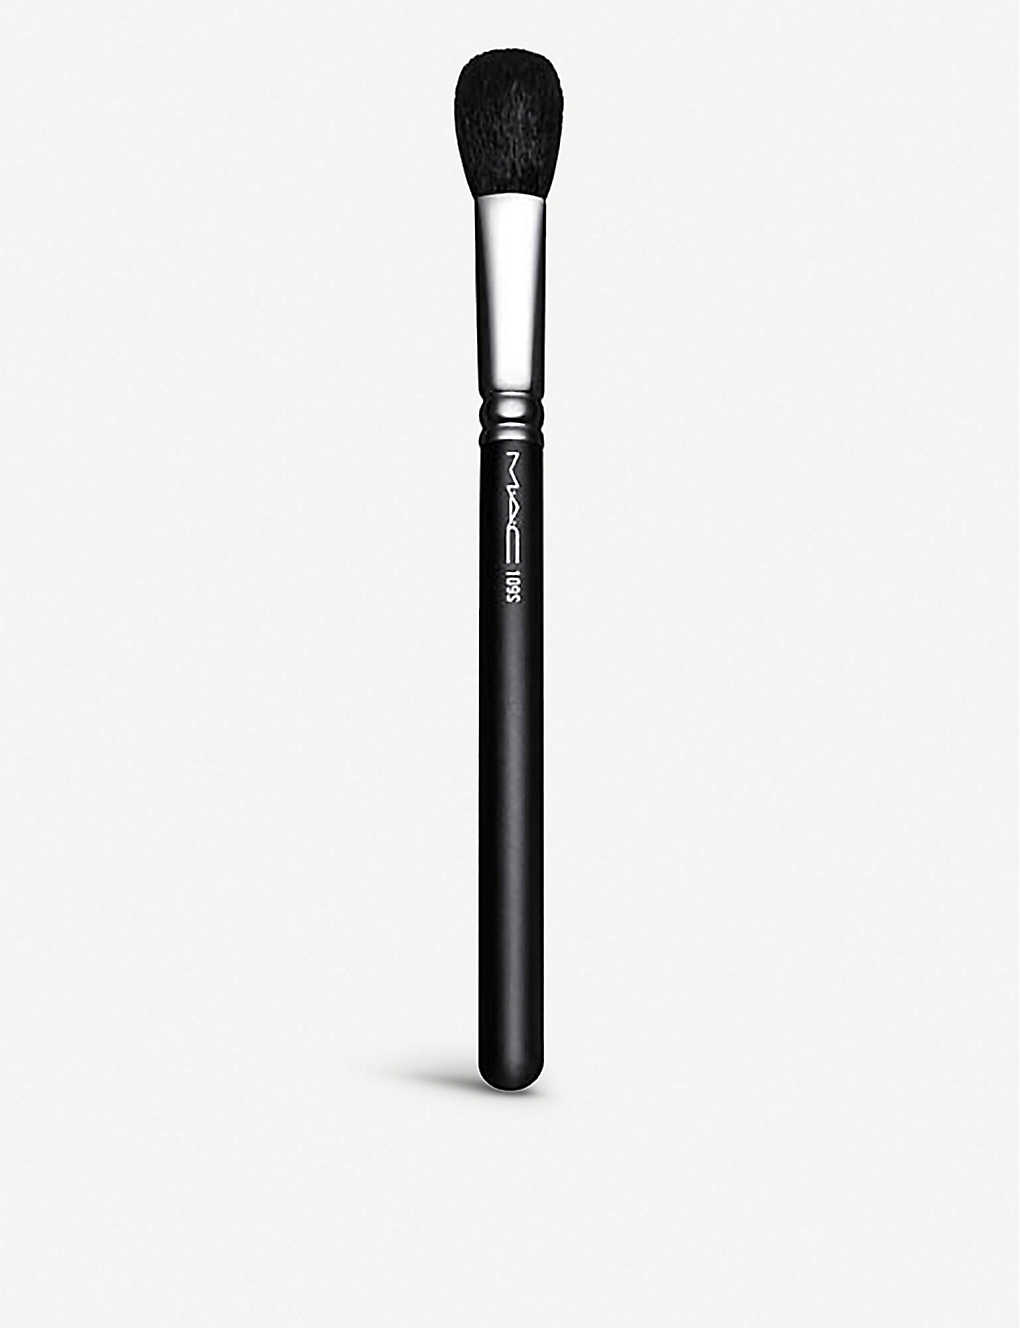 Mac 109 Small Contour Brush